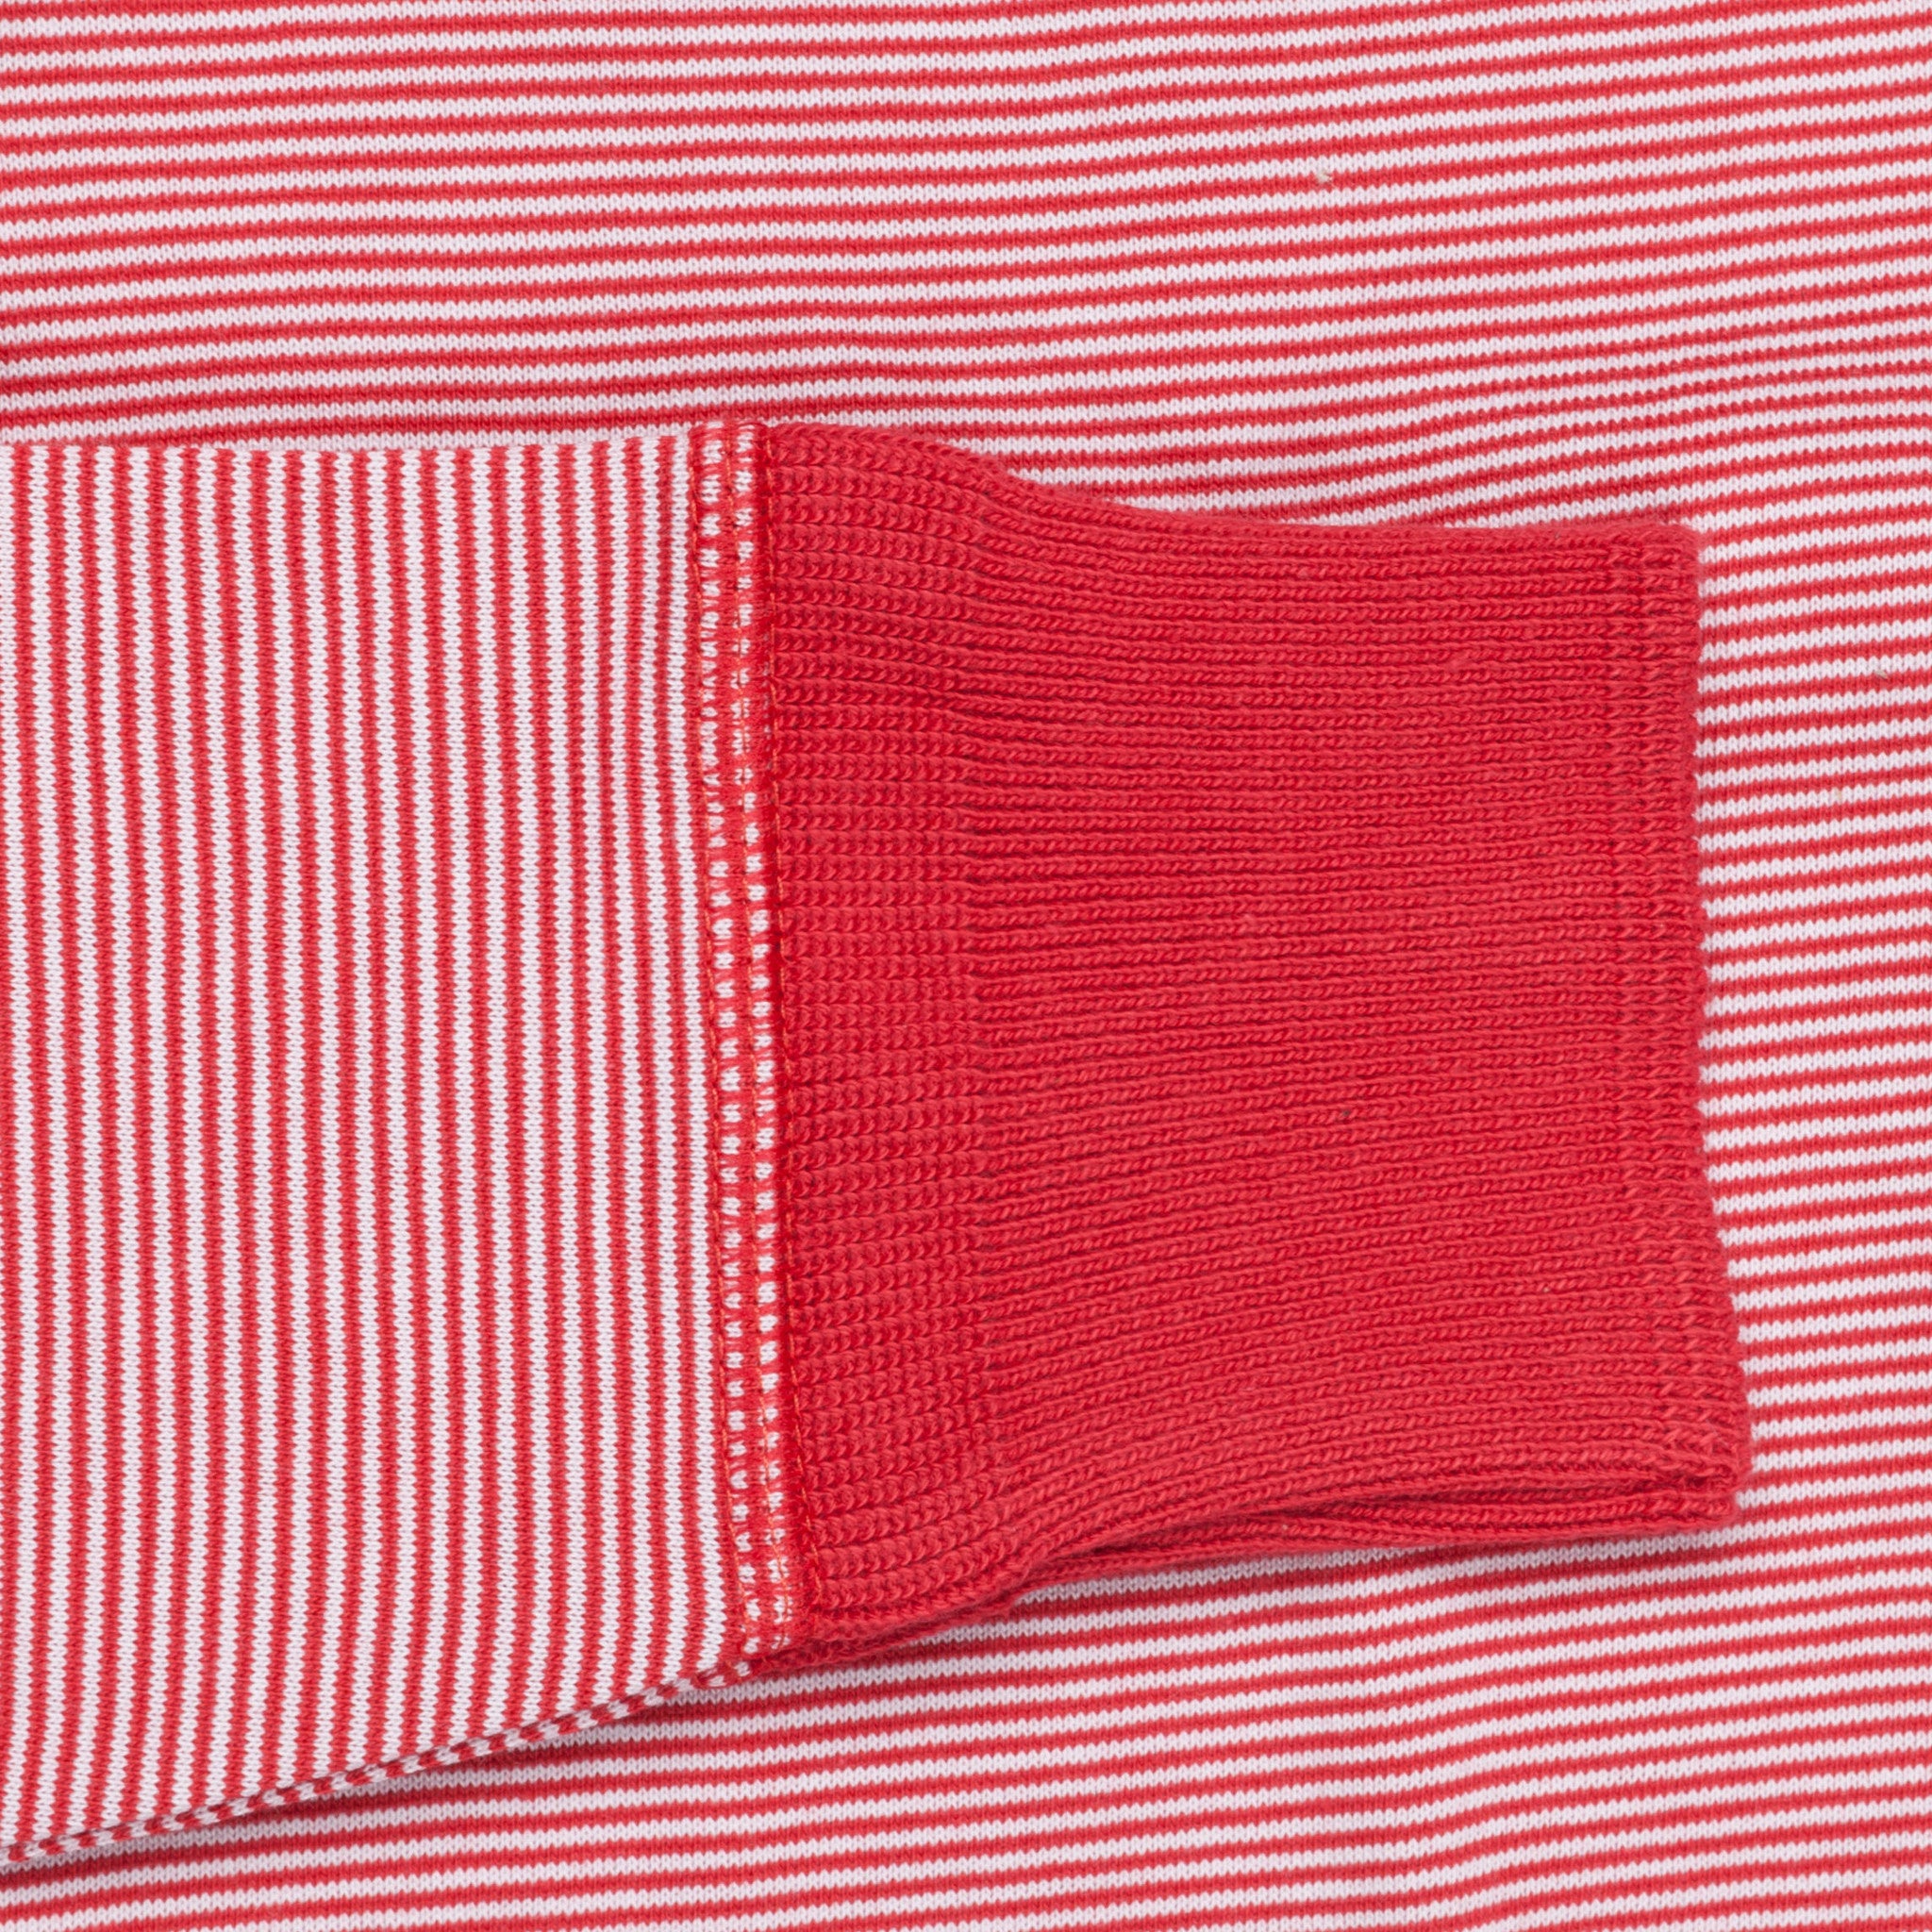 Merz B Schwanen 226 button facing shirt red white stripe